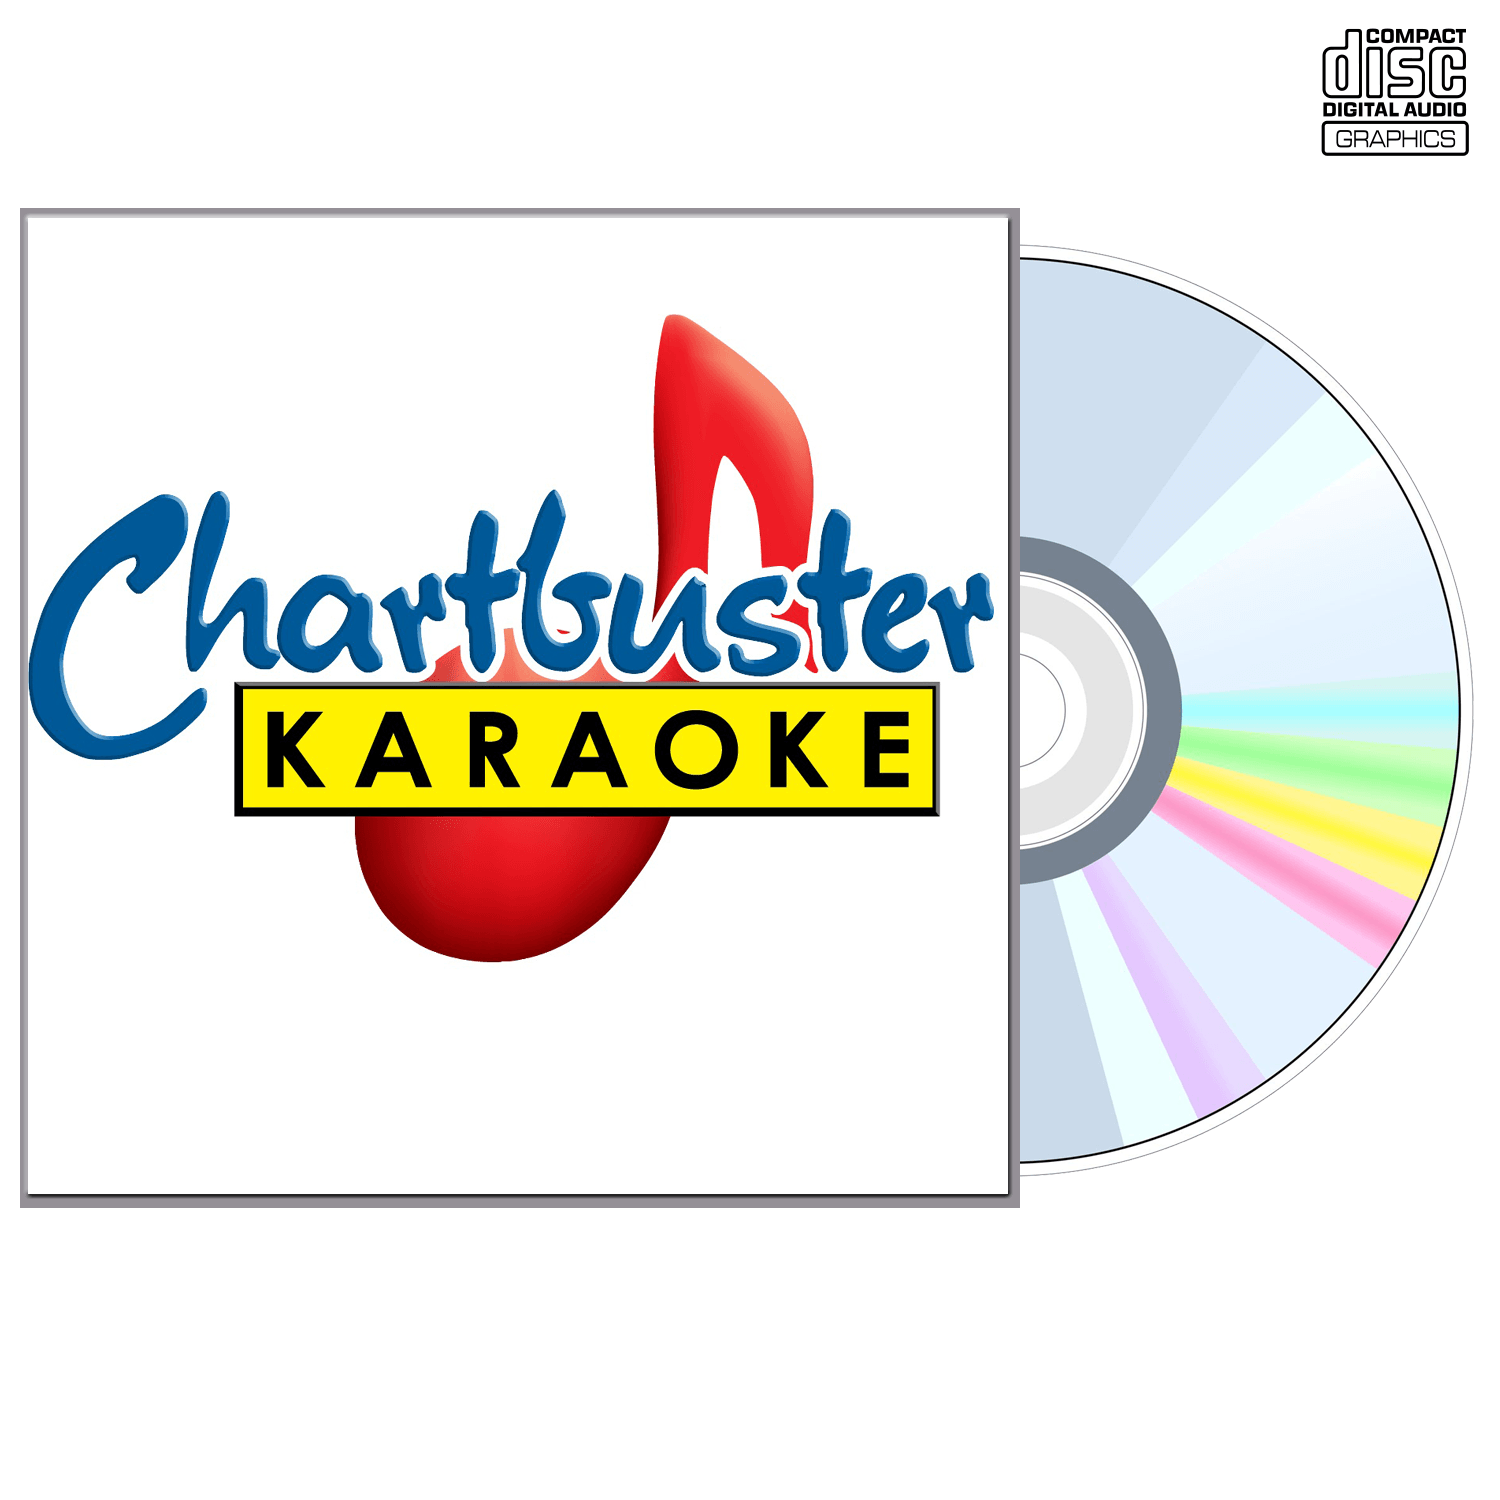 Pink Vol 2 - CD+G - Chartbuster Karaoke - Karaoke Home Entertainment